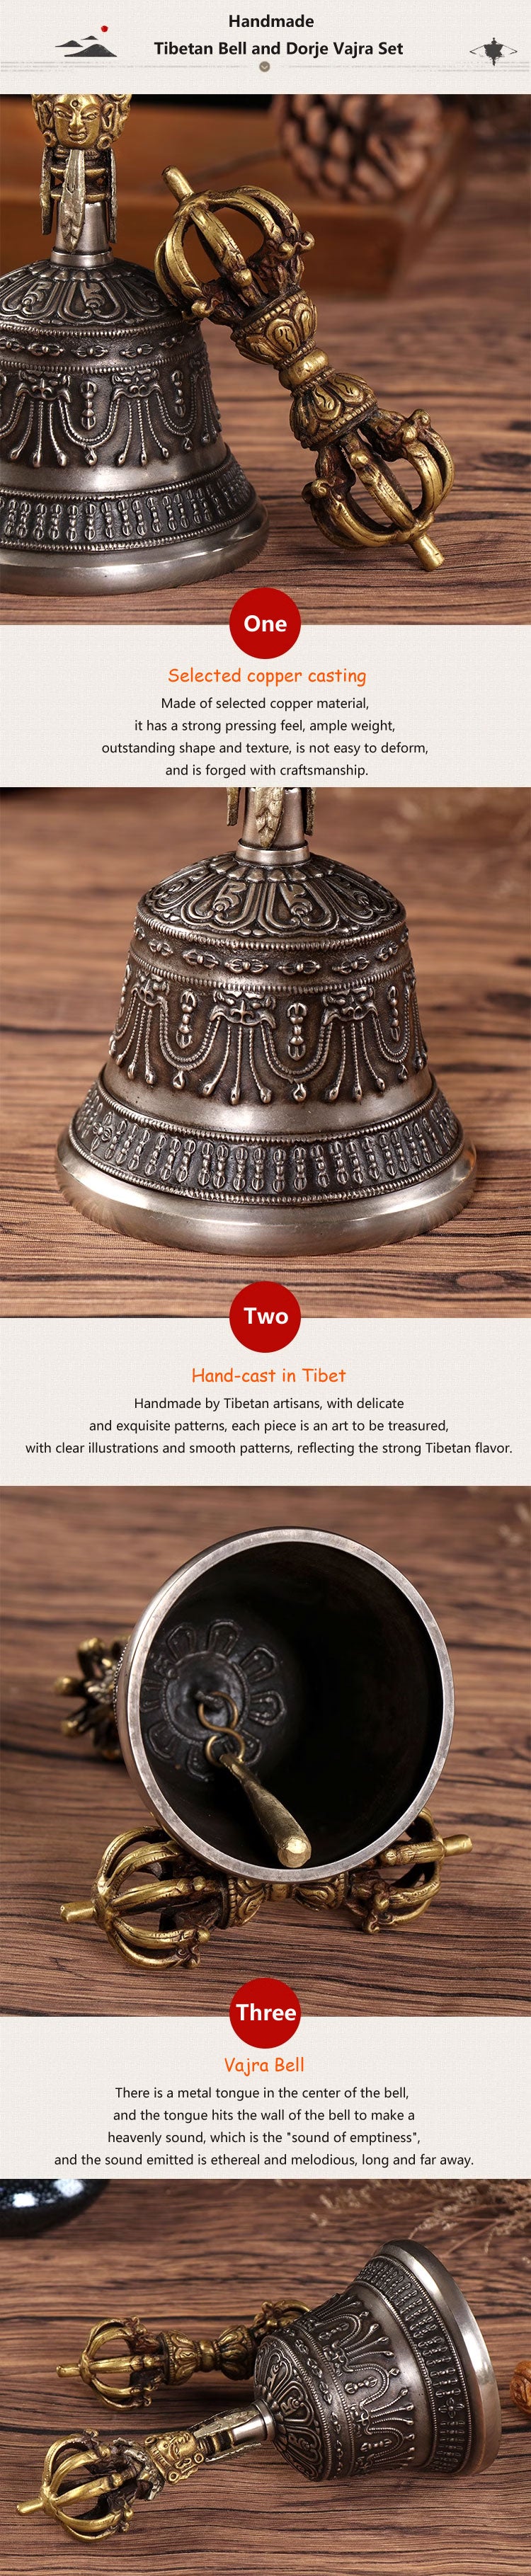 Tibetan Hand Bell and Dorje Vajra Set for Sale, Handmade in Bronze with Nine Strands of Carvings detail 2